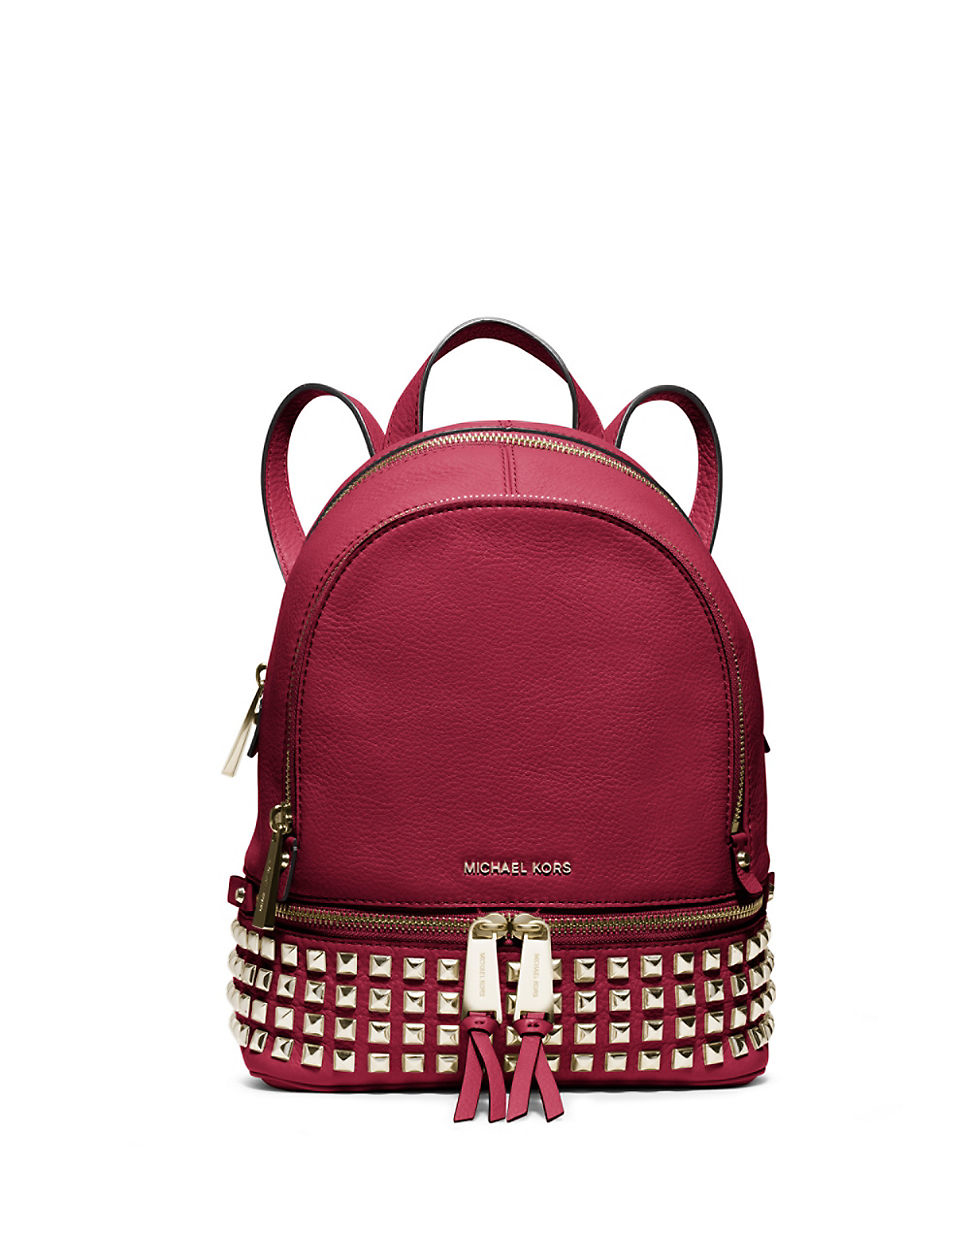 MICHAEL Michael Kors Rhea Leather Mini Backpack in Cherry (Red) - Lyst